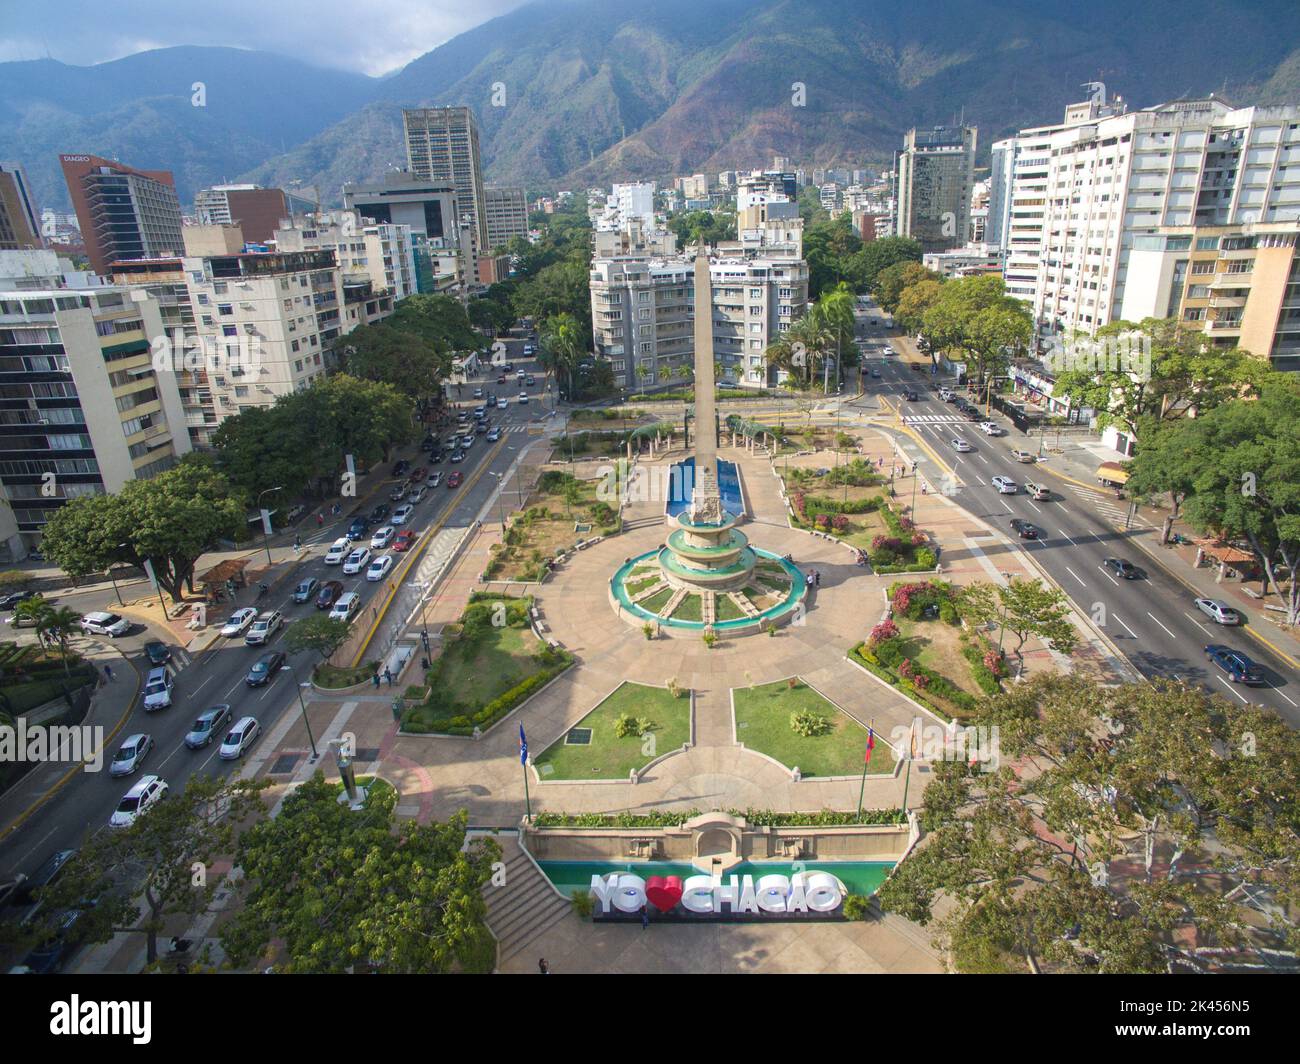 An aerial shot of the tower in Plaza Francia, Miranda, Venezuela Stock Photo